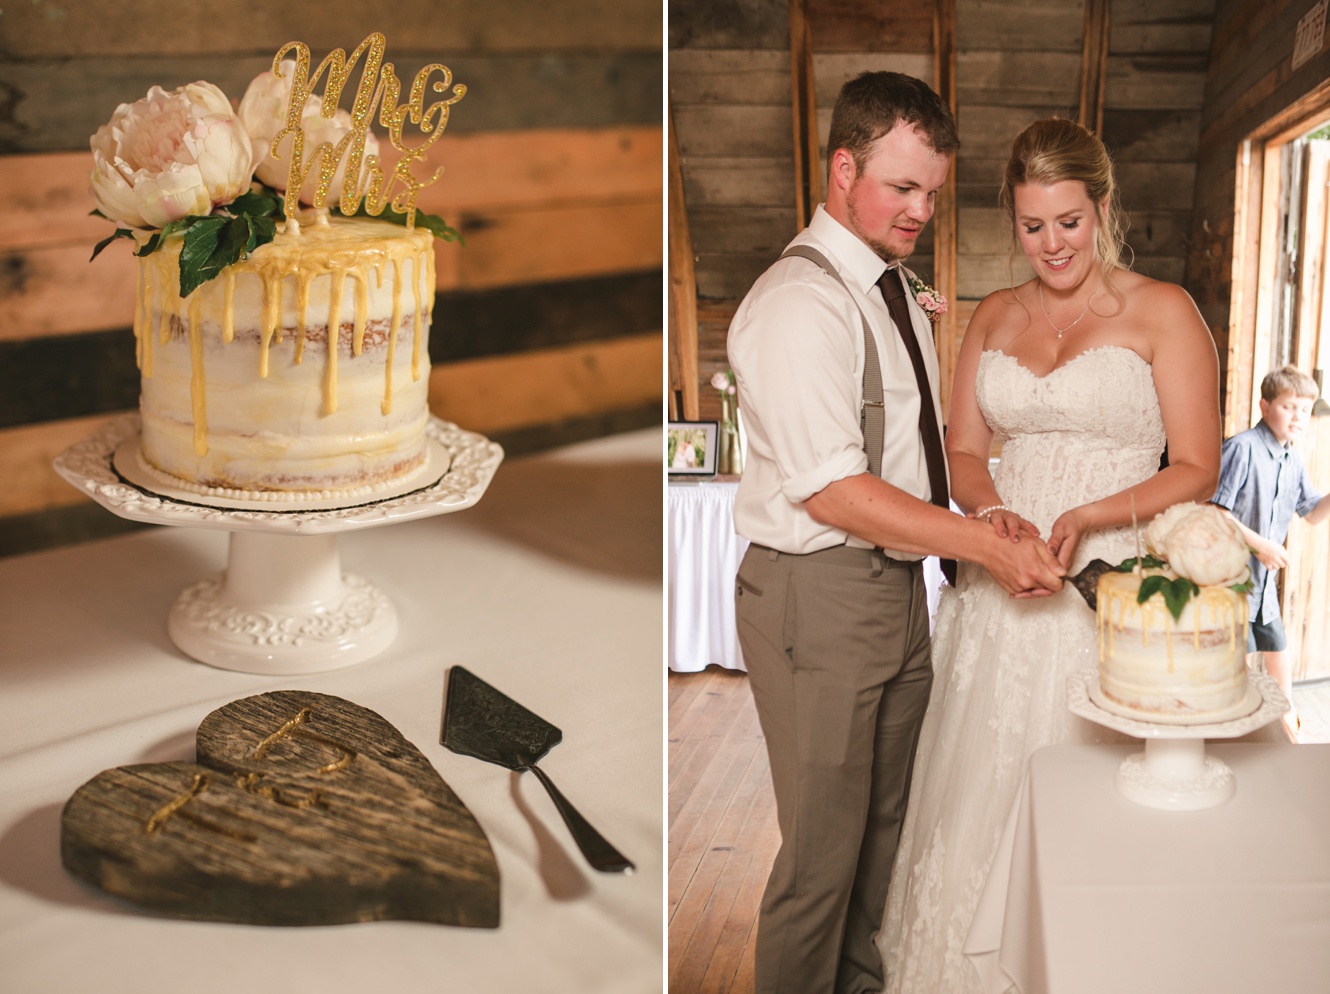 gold and yellow wedding cake photo